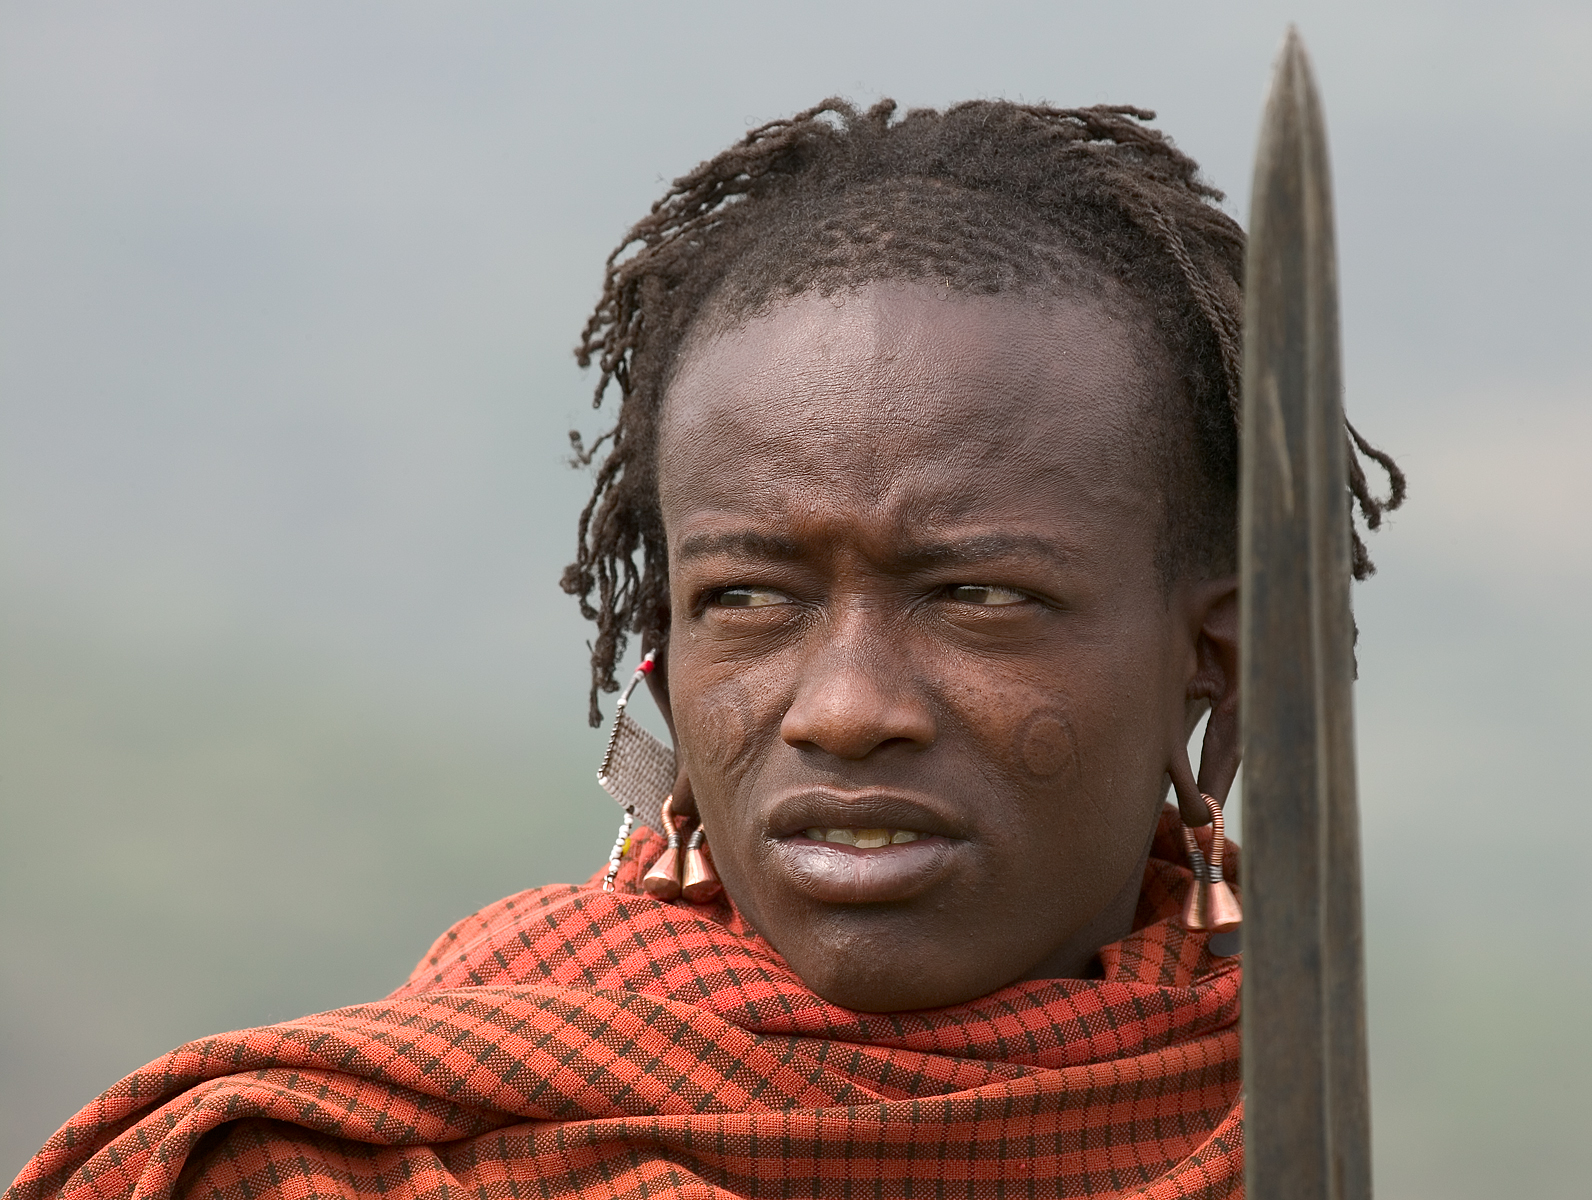 Joven guerrero Maasai